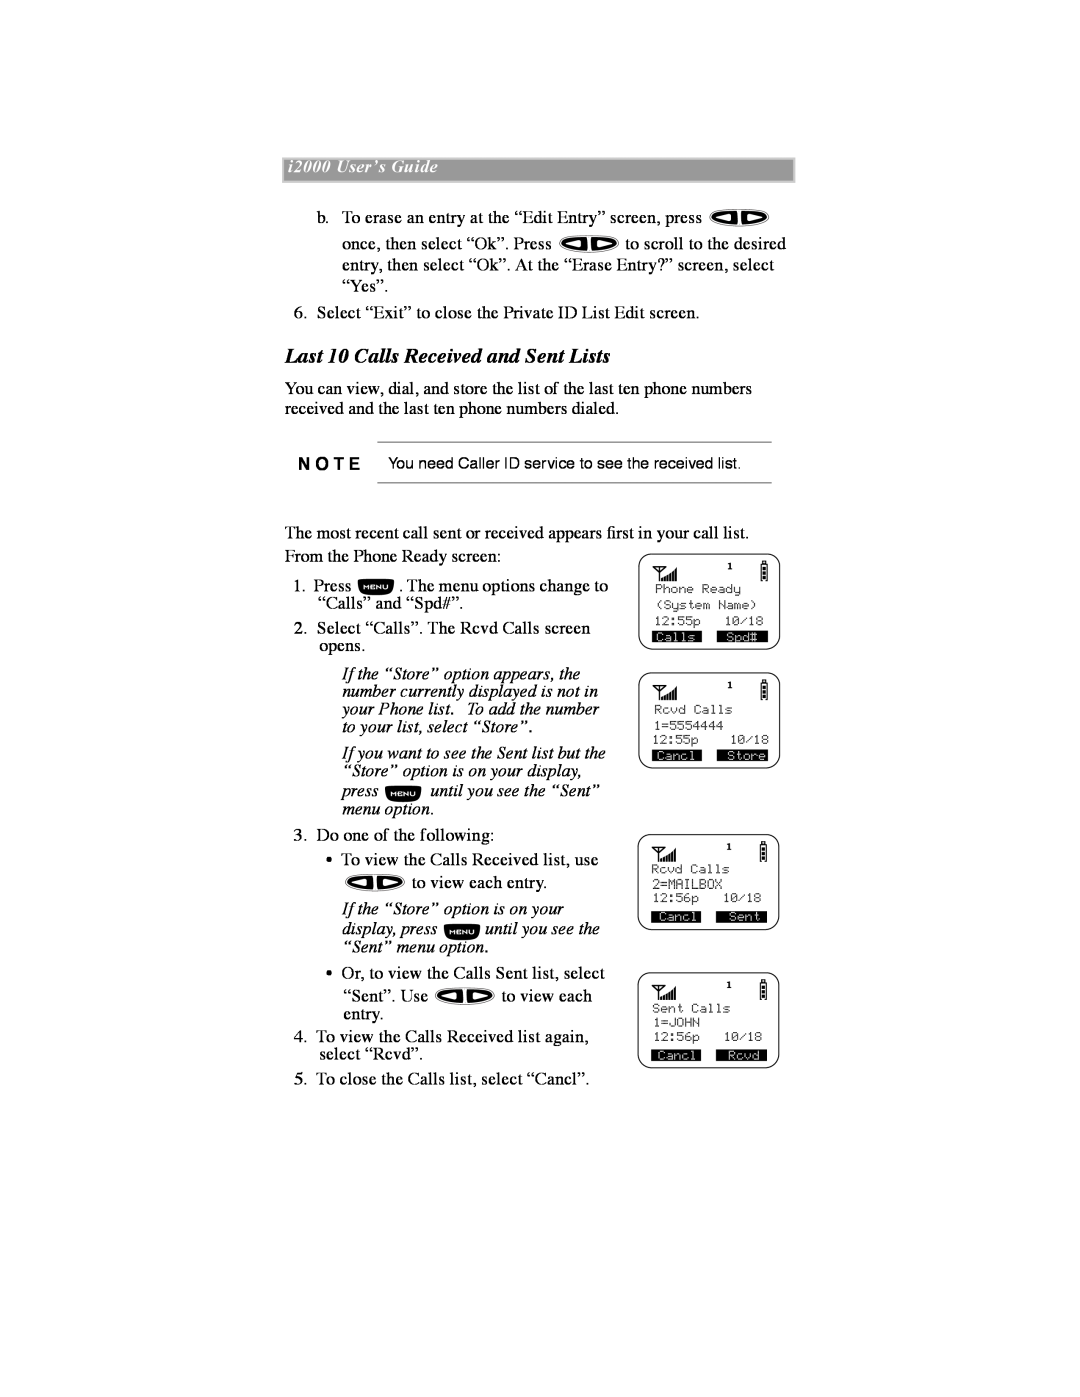 Motorola iDEN manual Last 10 Calls Received and Sent Lists, press until you see the ÒSentÓ menu option, i2000 UserÕs Guide 